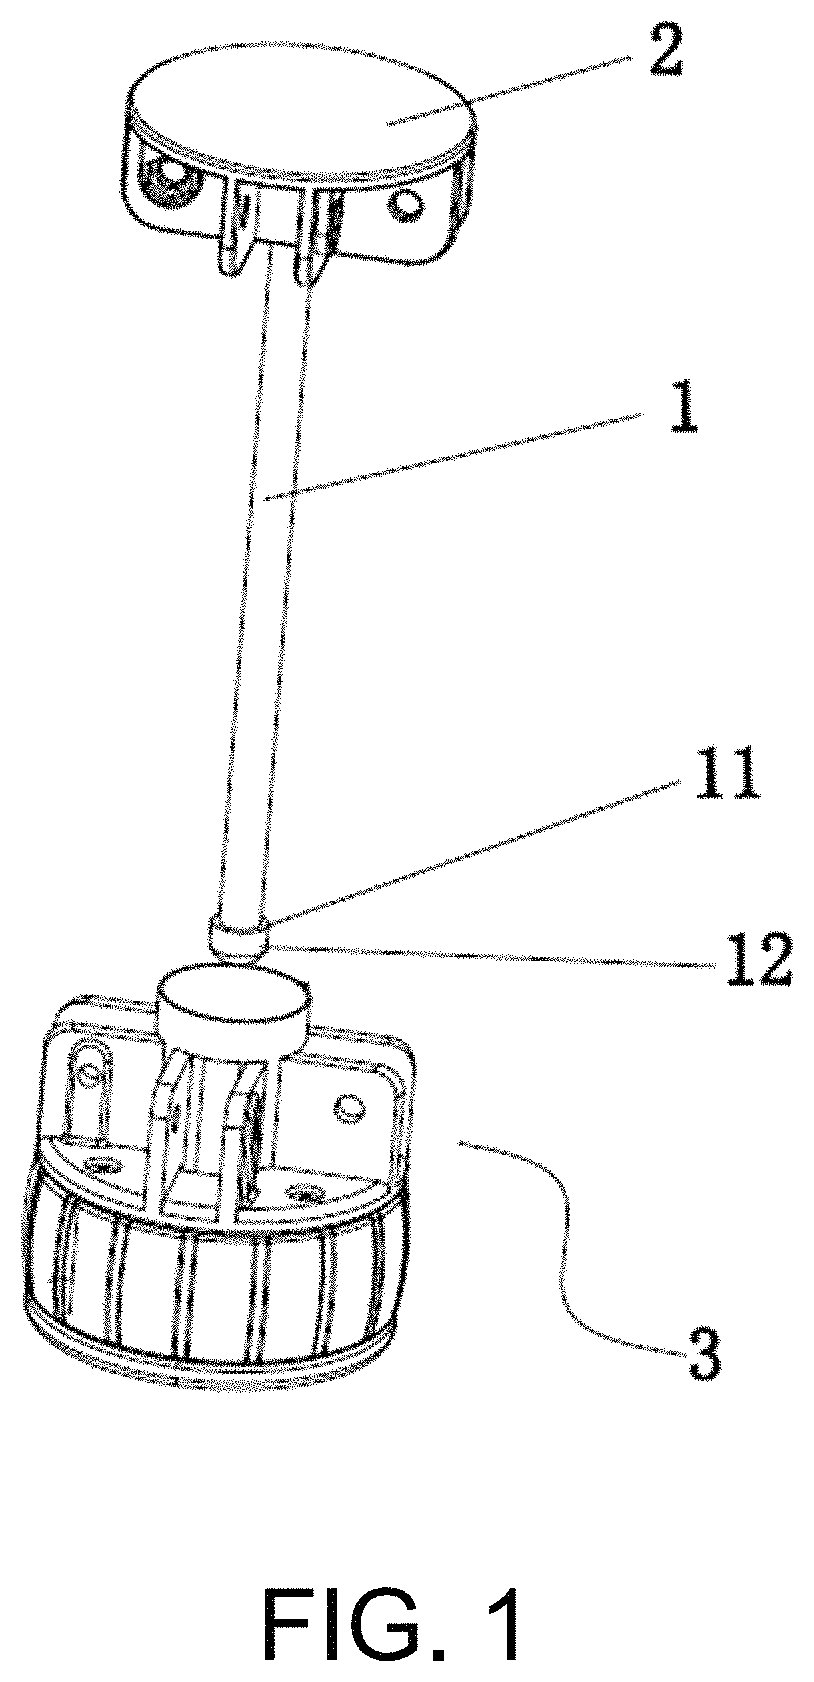 Central bidirectional rotation locking mechanism for folding tent